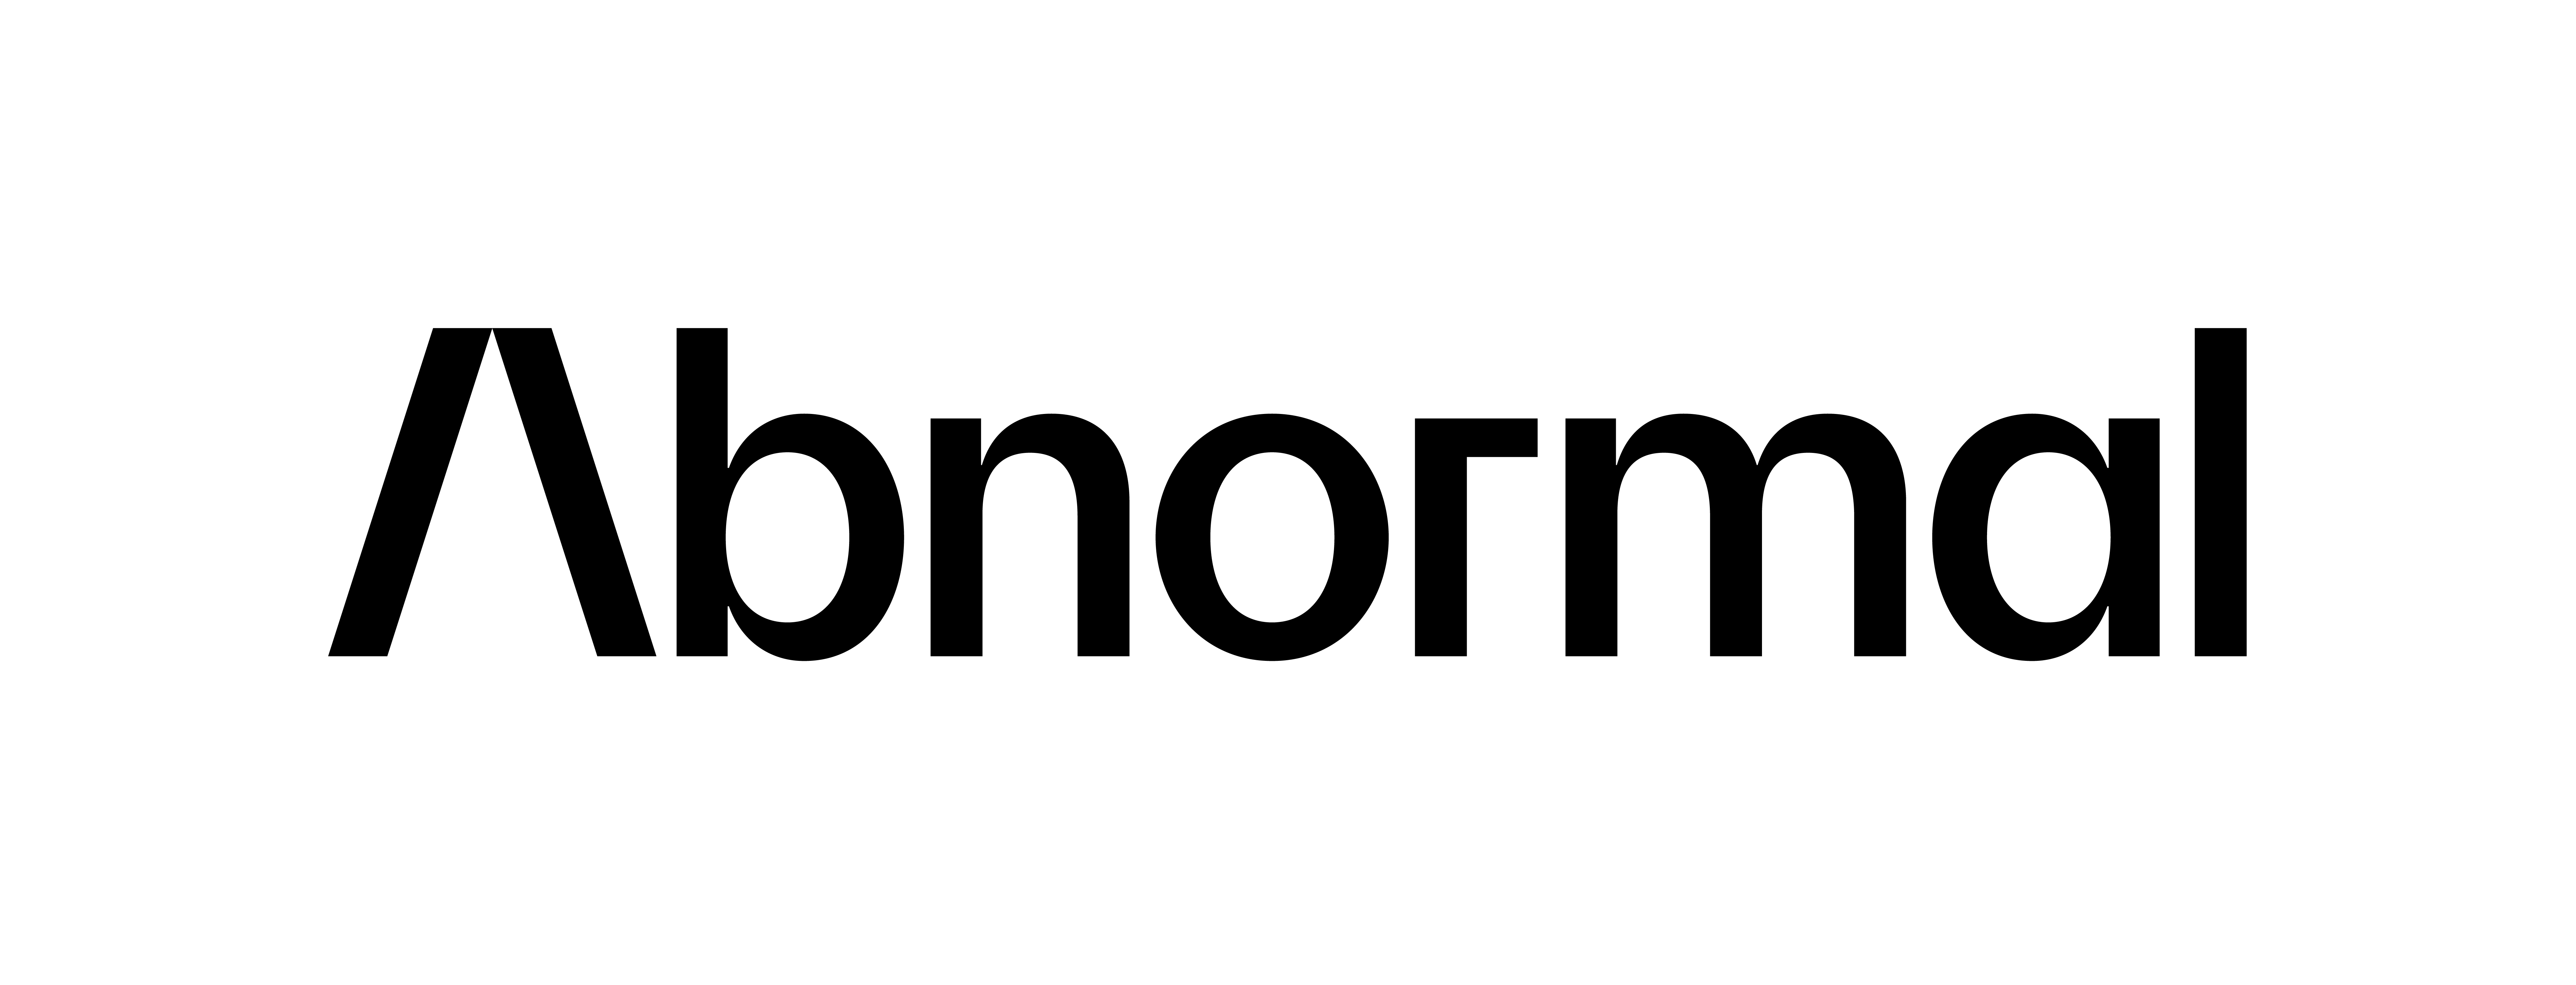 Abnormal-logo-horizontal-black@2x.png